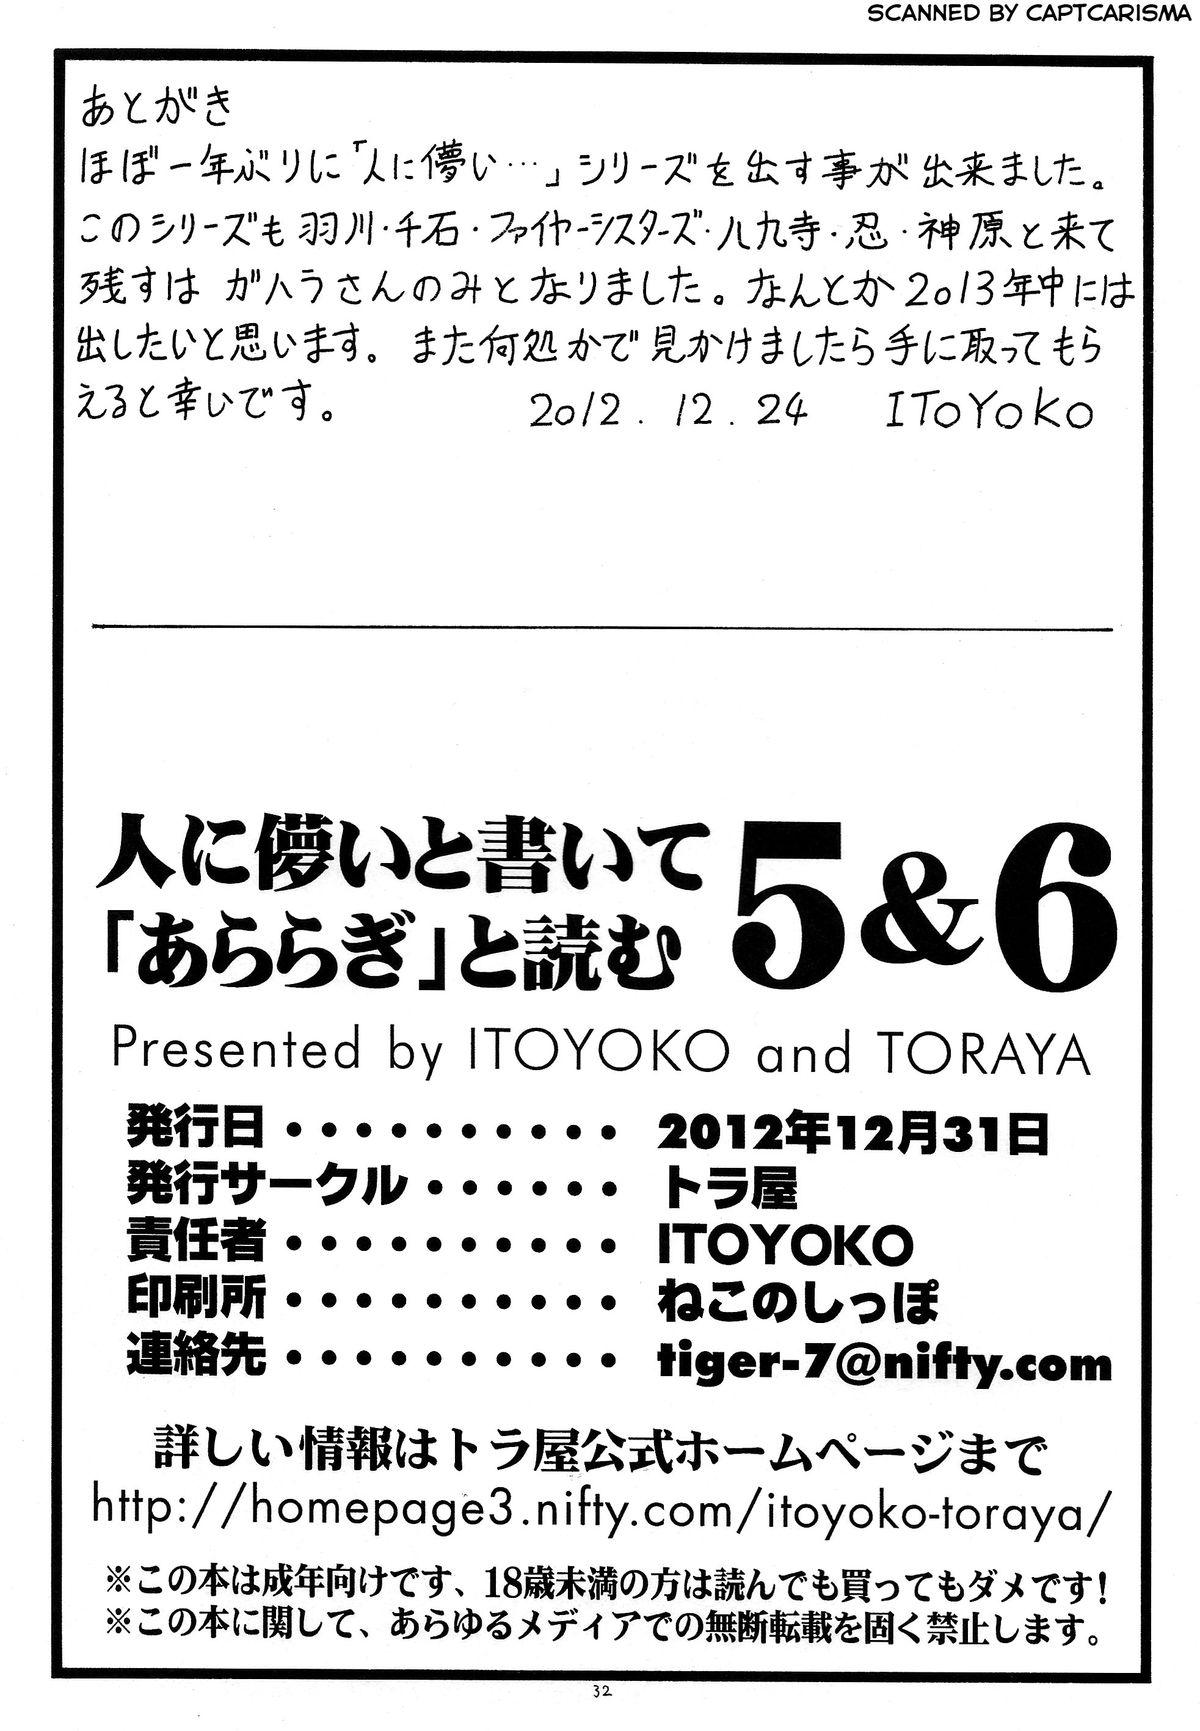 Prima Hito ni Hakanai to Kaite "Araragi" to Yomu 5&6 - Bakemonogatari Brunette - Page 34